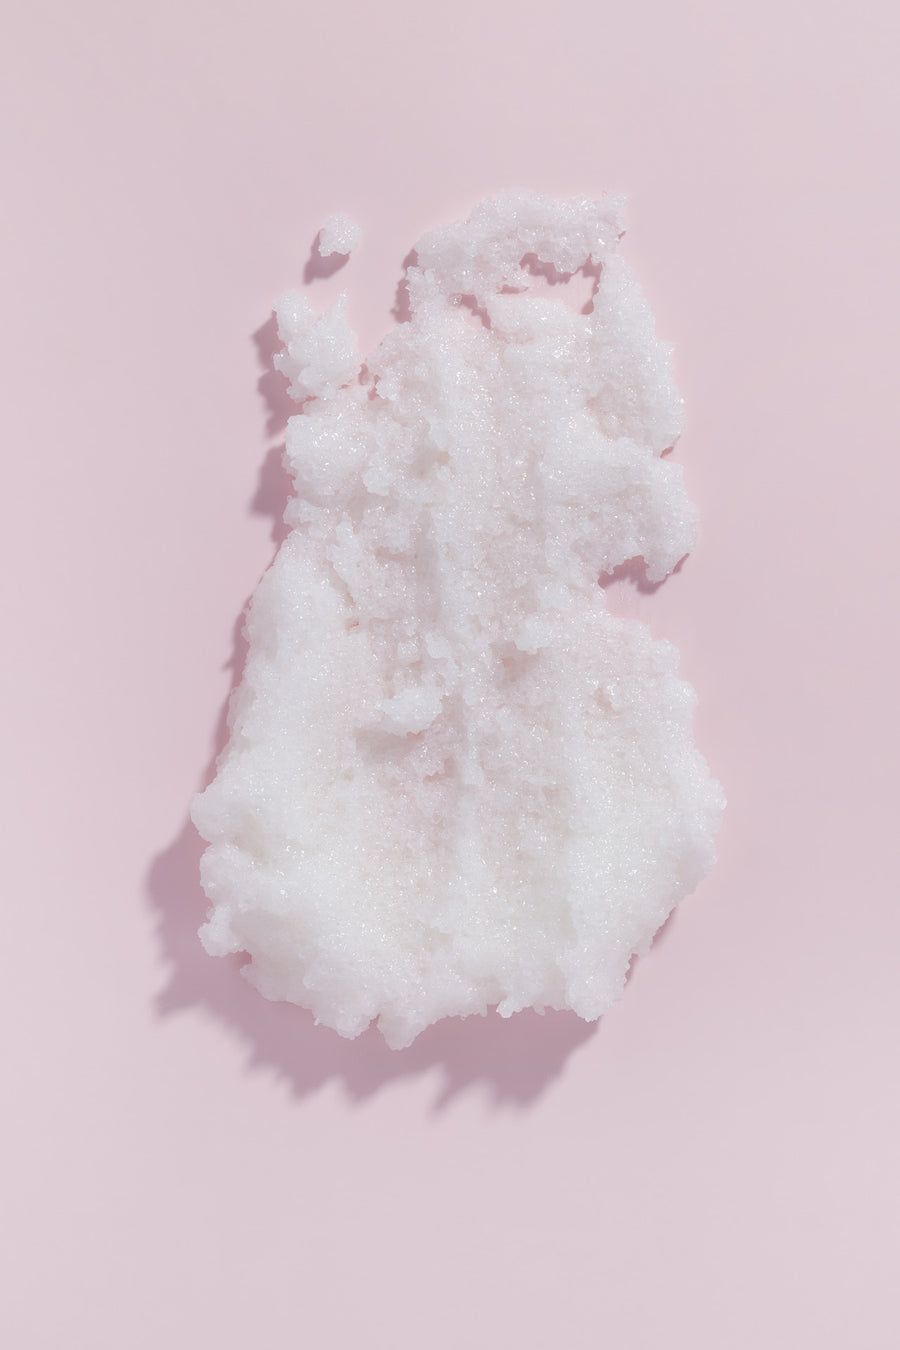 salt polish on light pink background